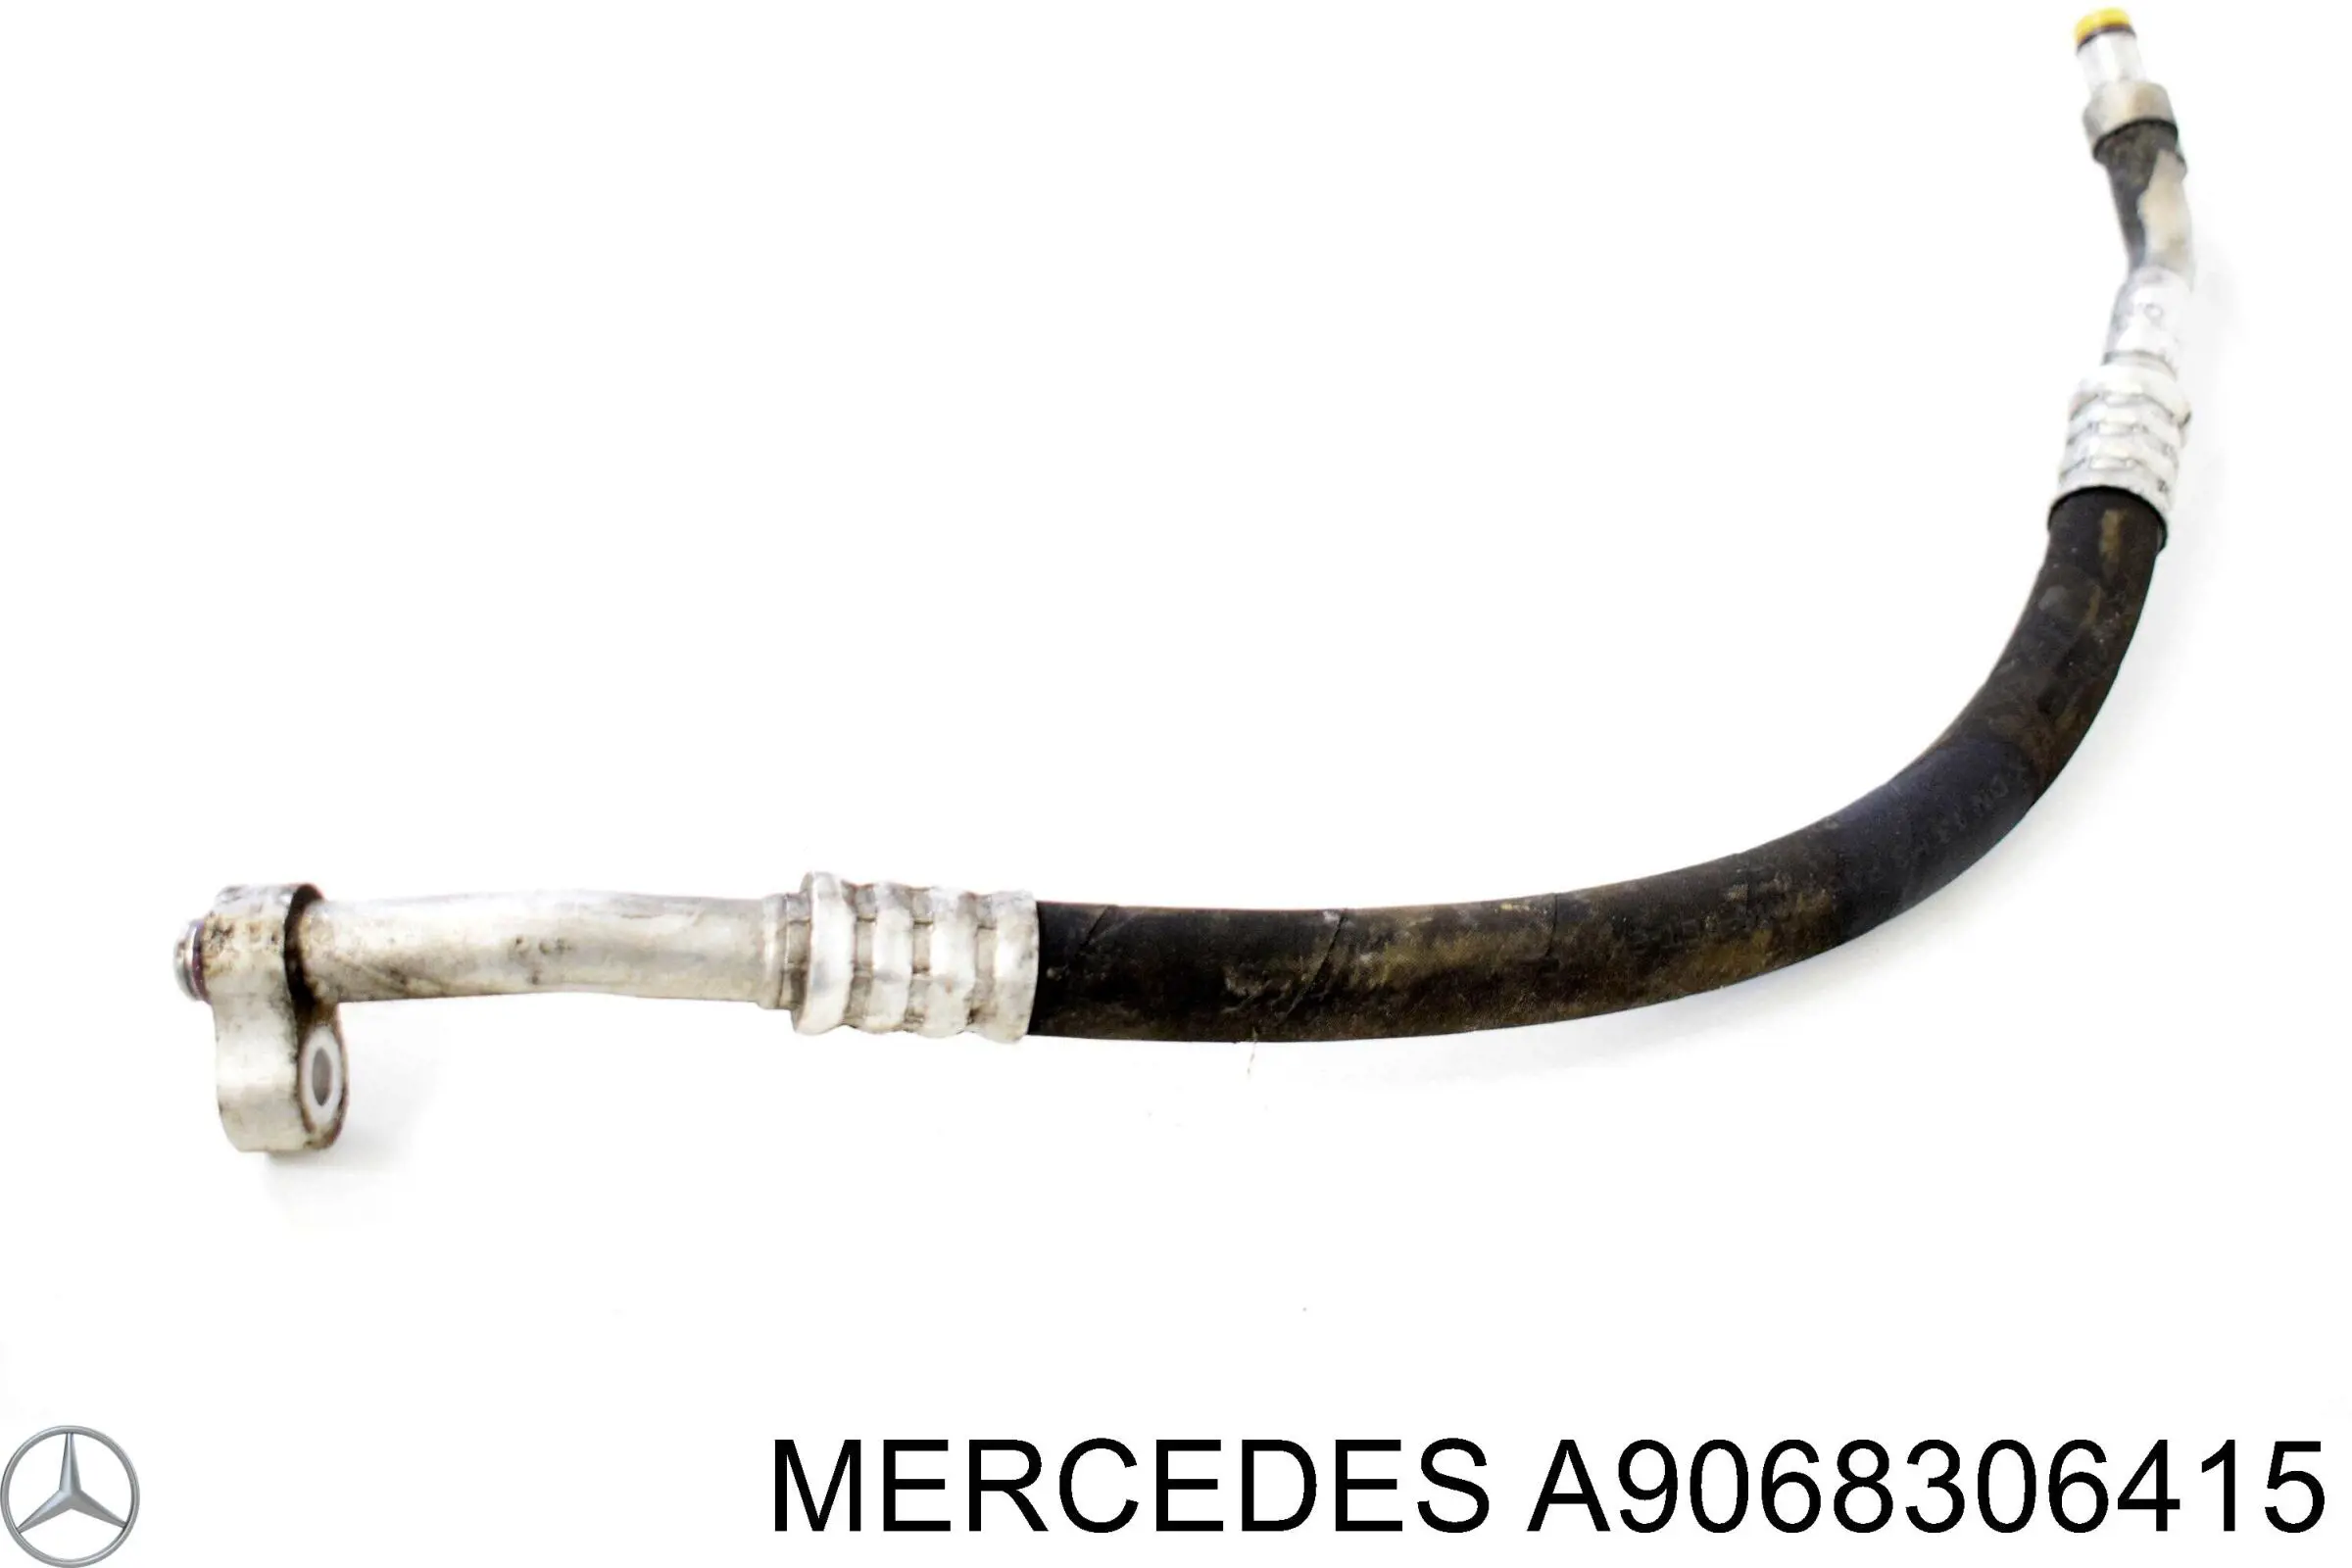 9068306415 Mercedes